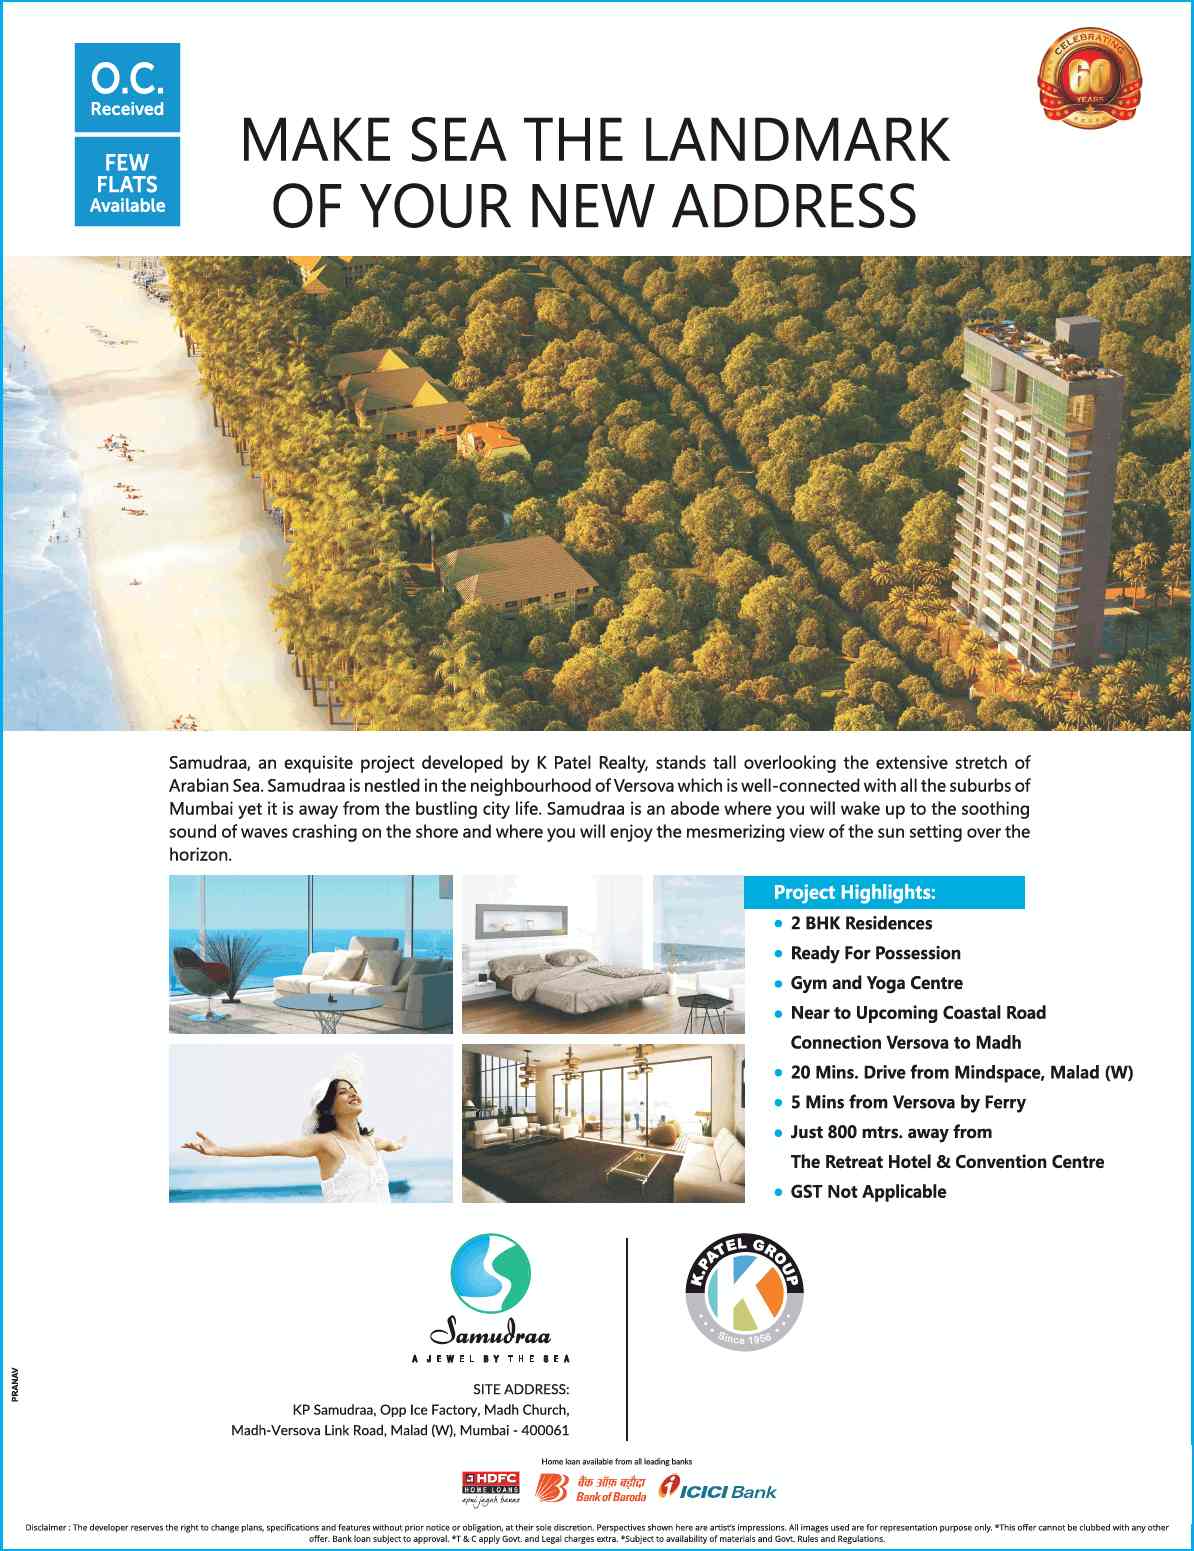 Book your abode at K Patel Samudraa & make sea the landmark of your new address in Mumbai Update